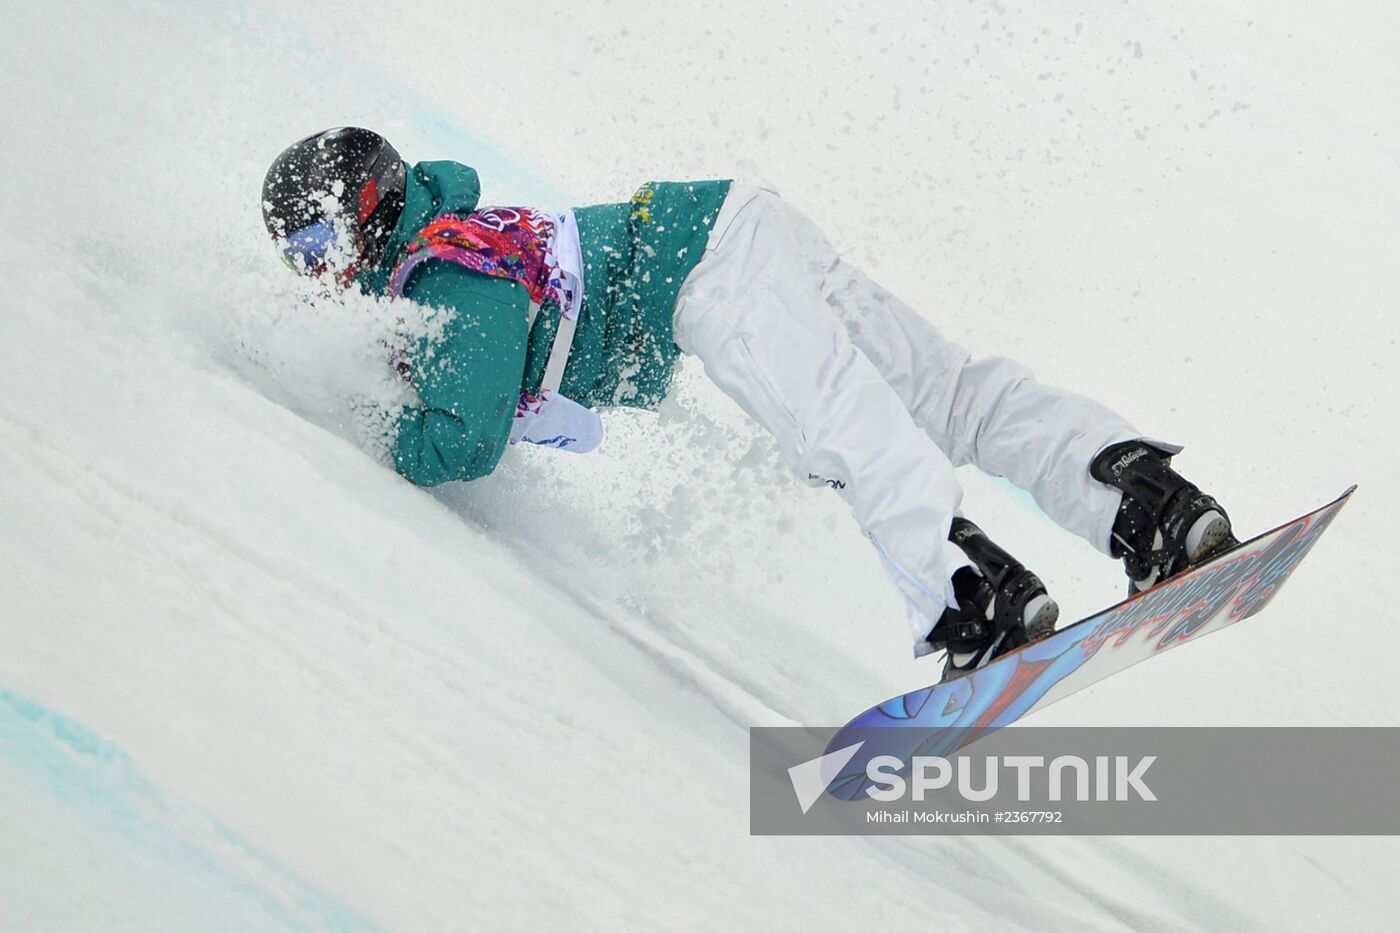 2014 Winter Olympics. Snowboarding. Men. Halfpipe